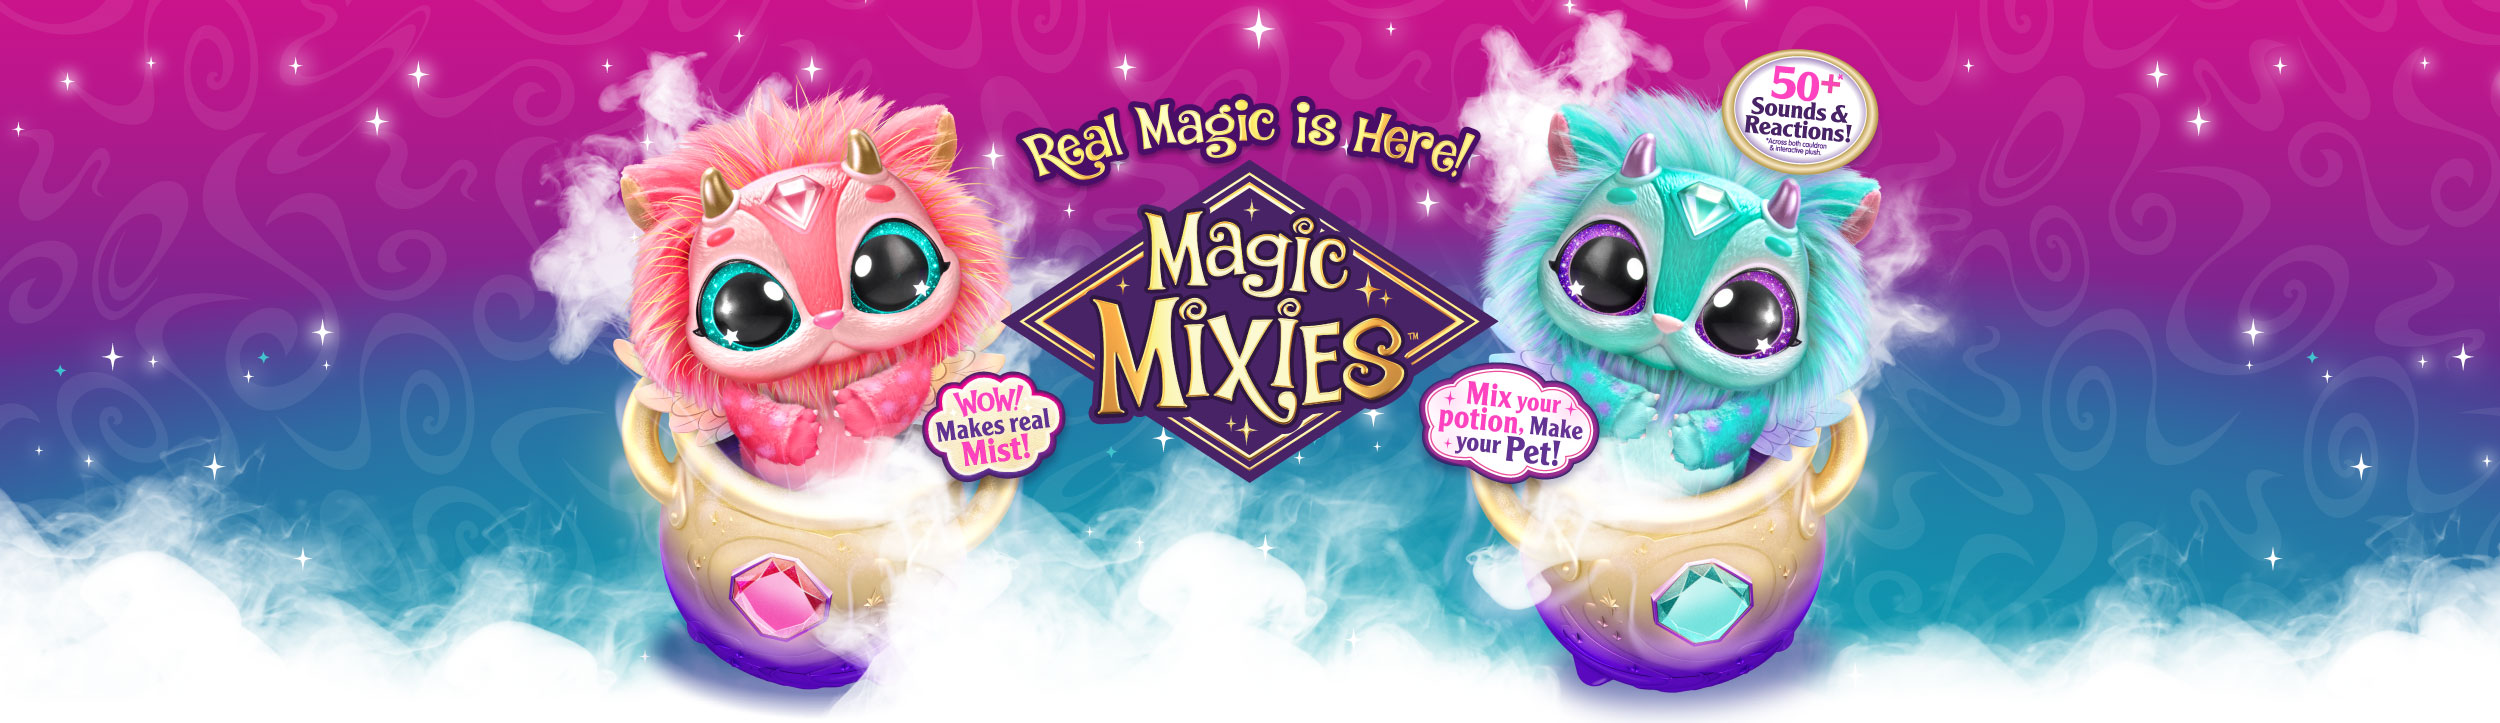 My magic mixie Magic Mixies Refill Figure Pink